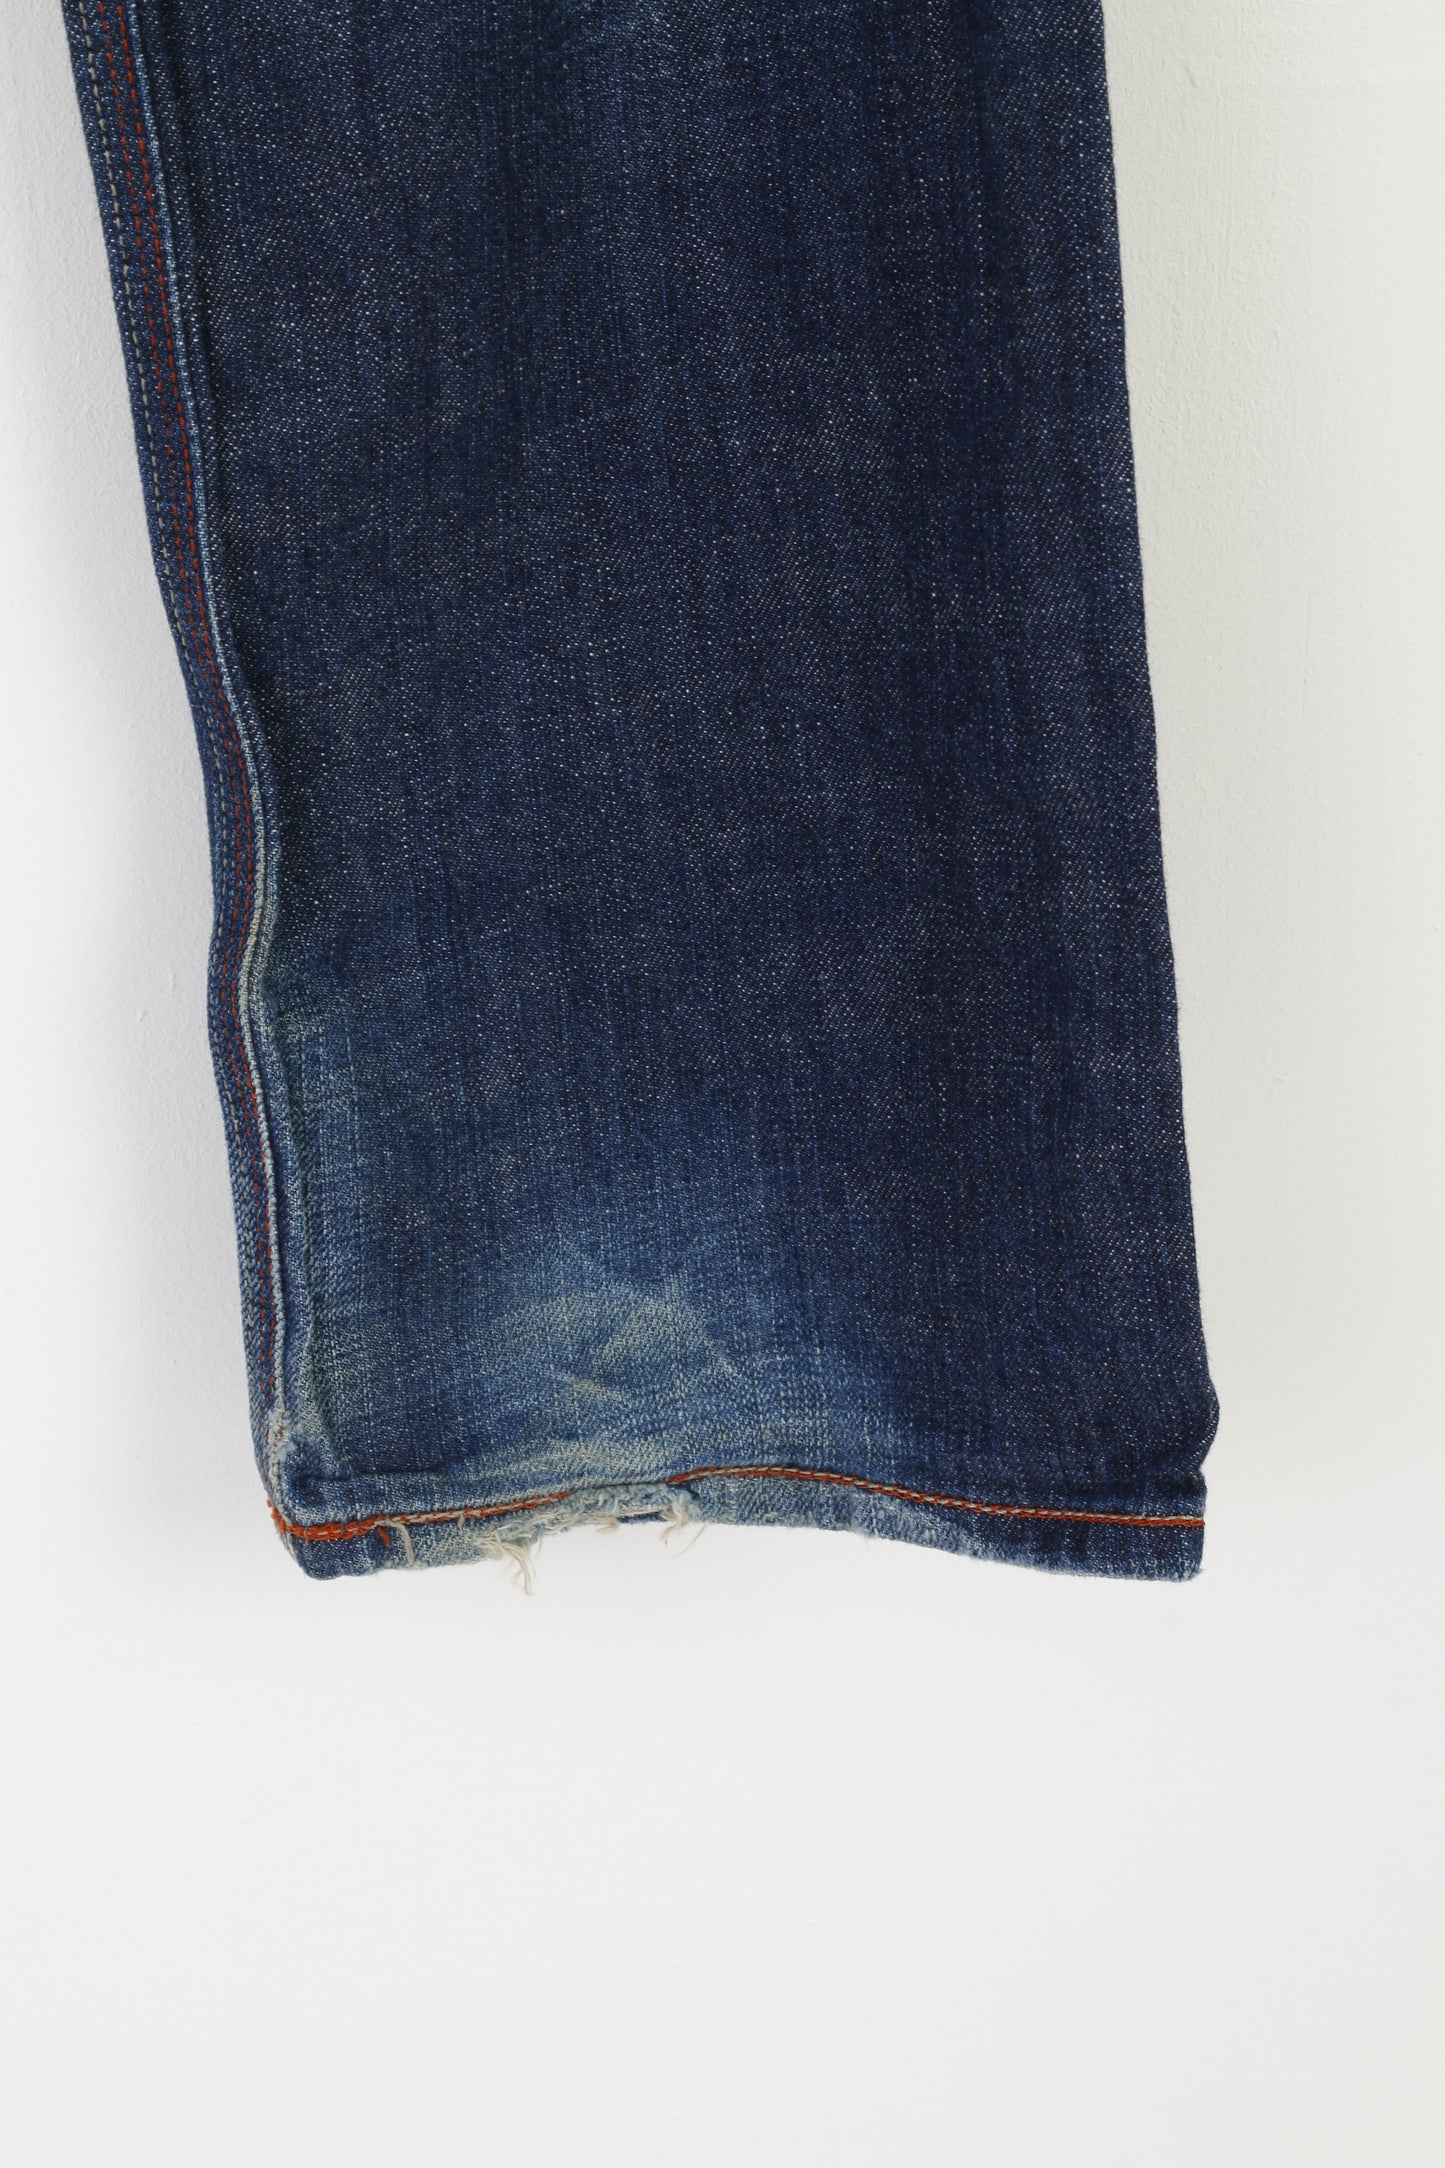 Diesel Industry Uomo 32 Pantaloni Jeans Pantaloni dritti Made in Italy in denim di cotone blu scuro